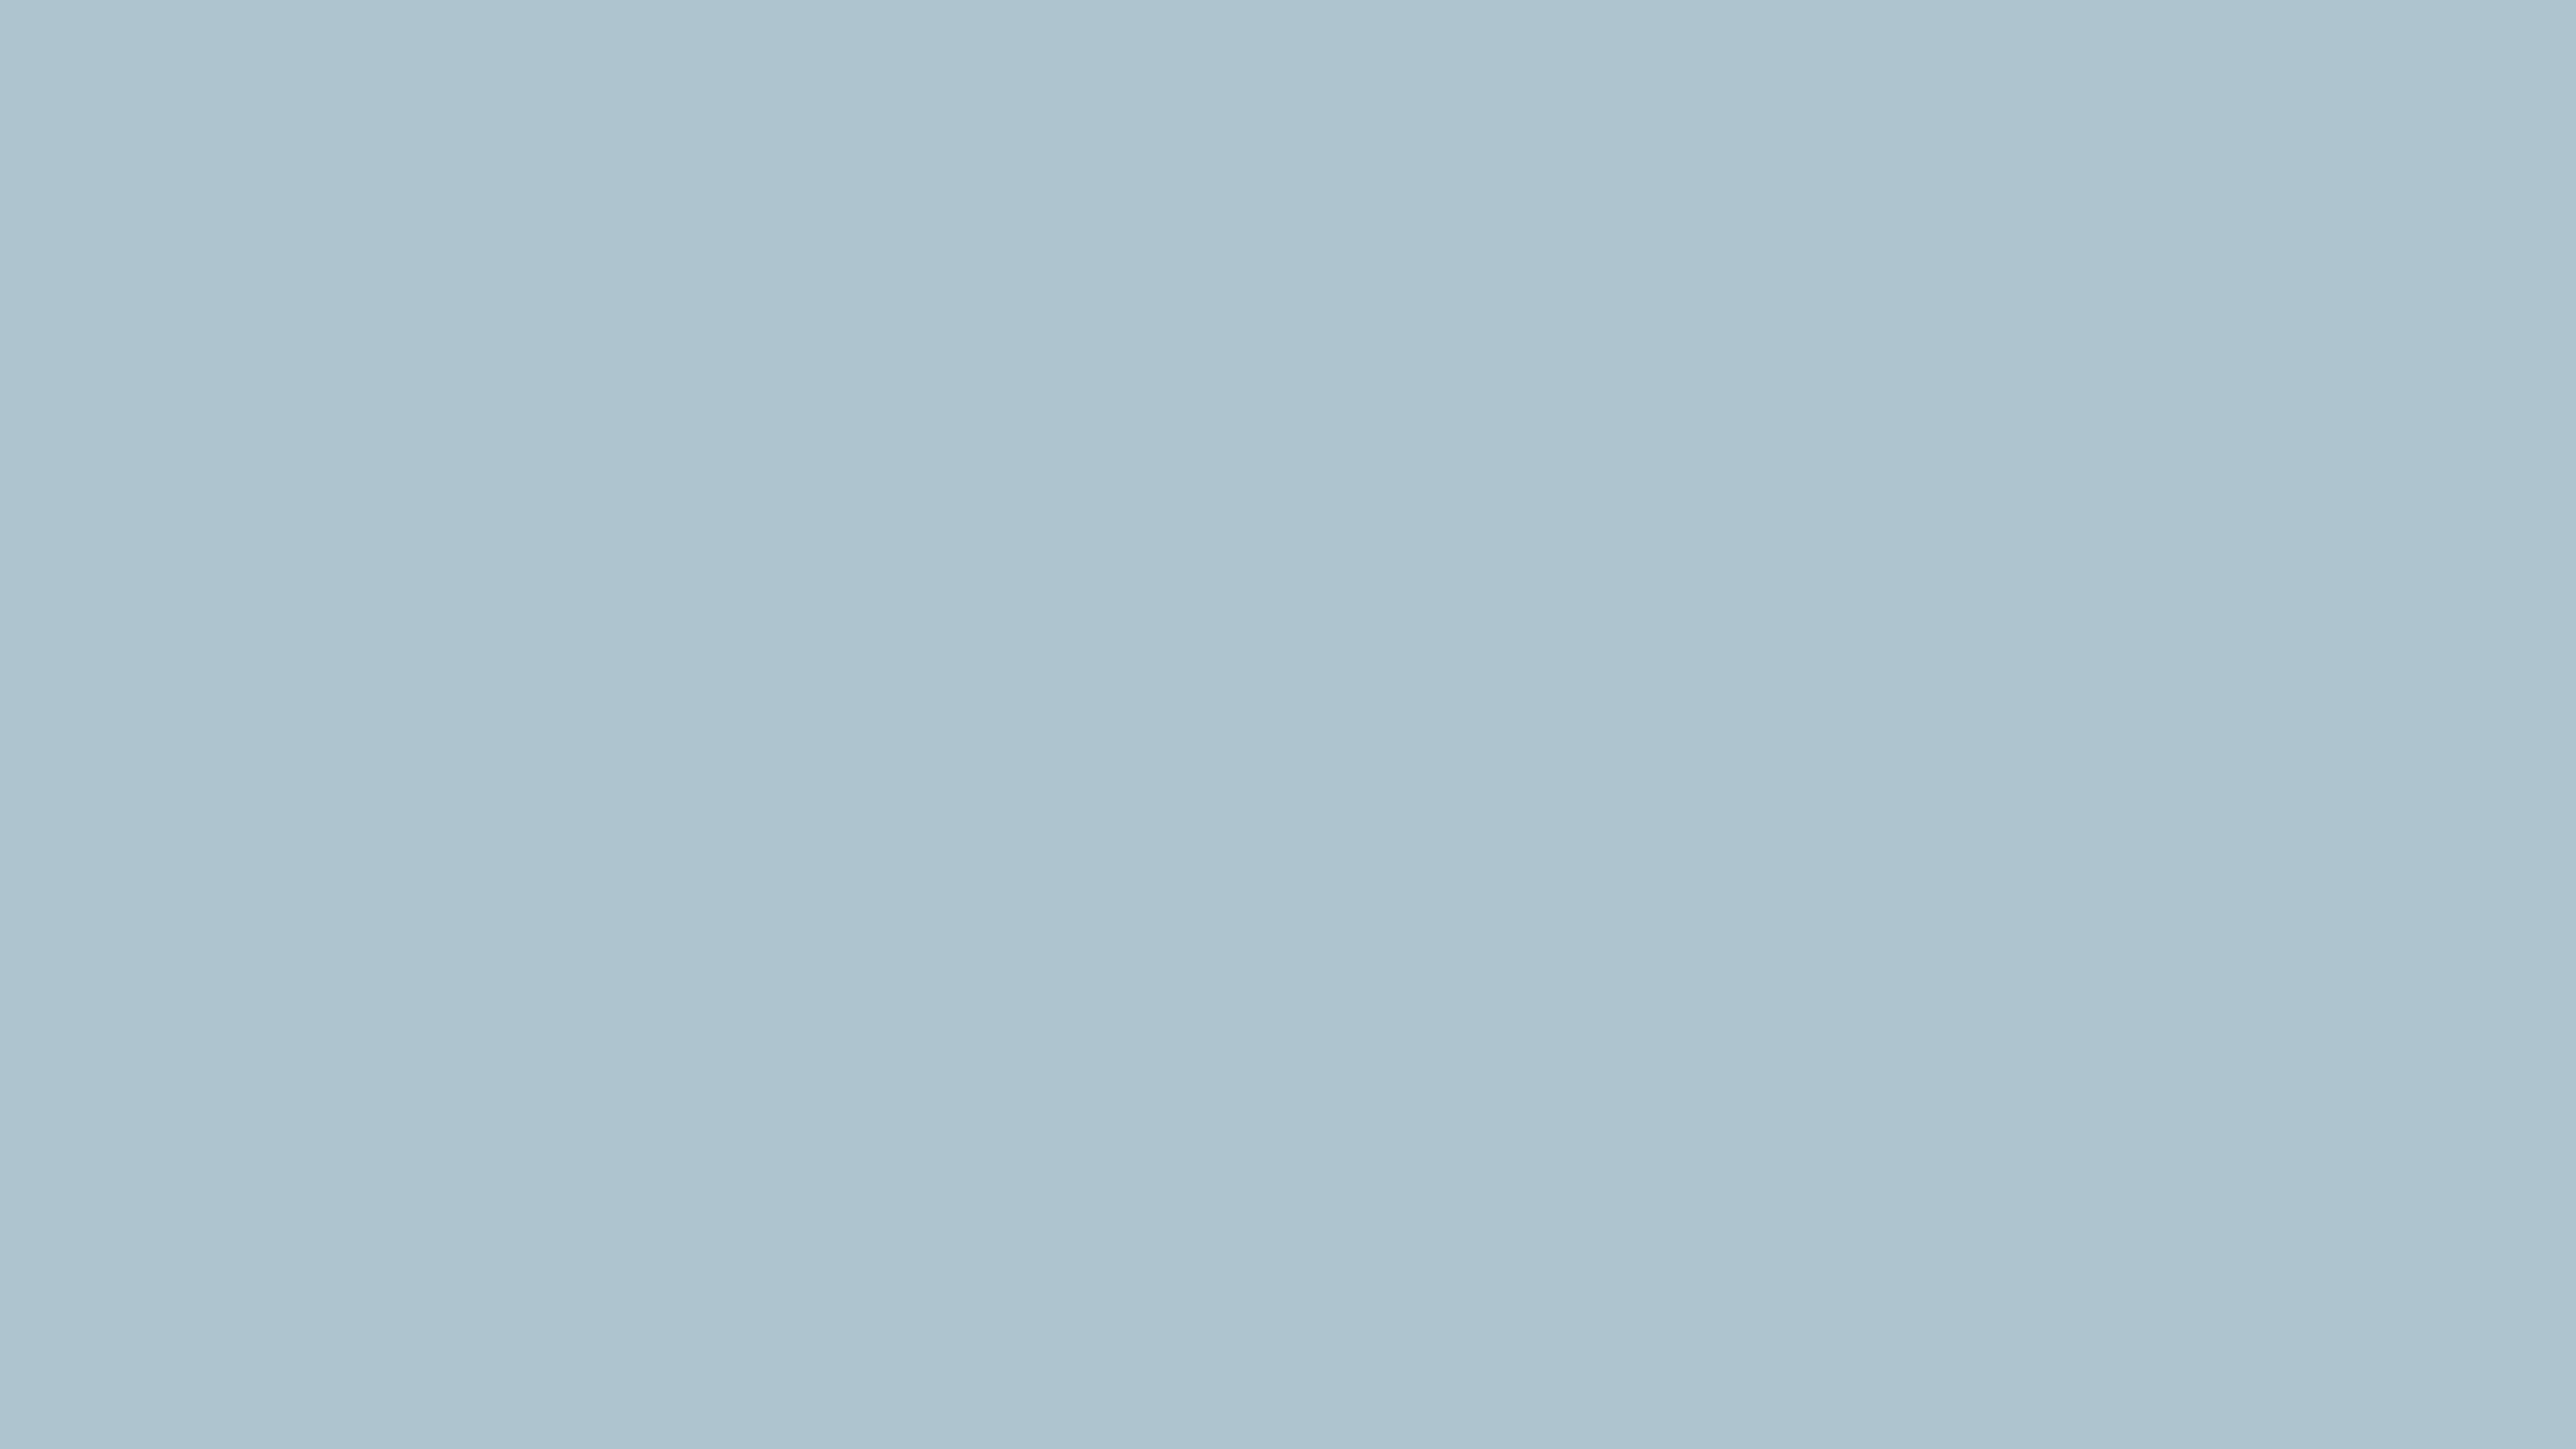 7680x4320 Pastel Blue Solid Color Background